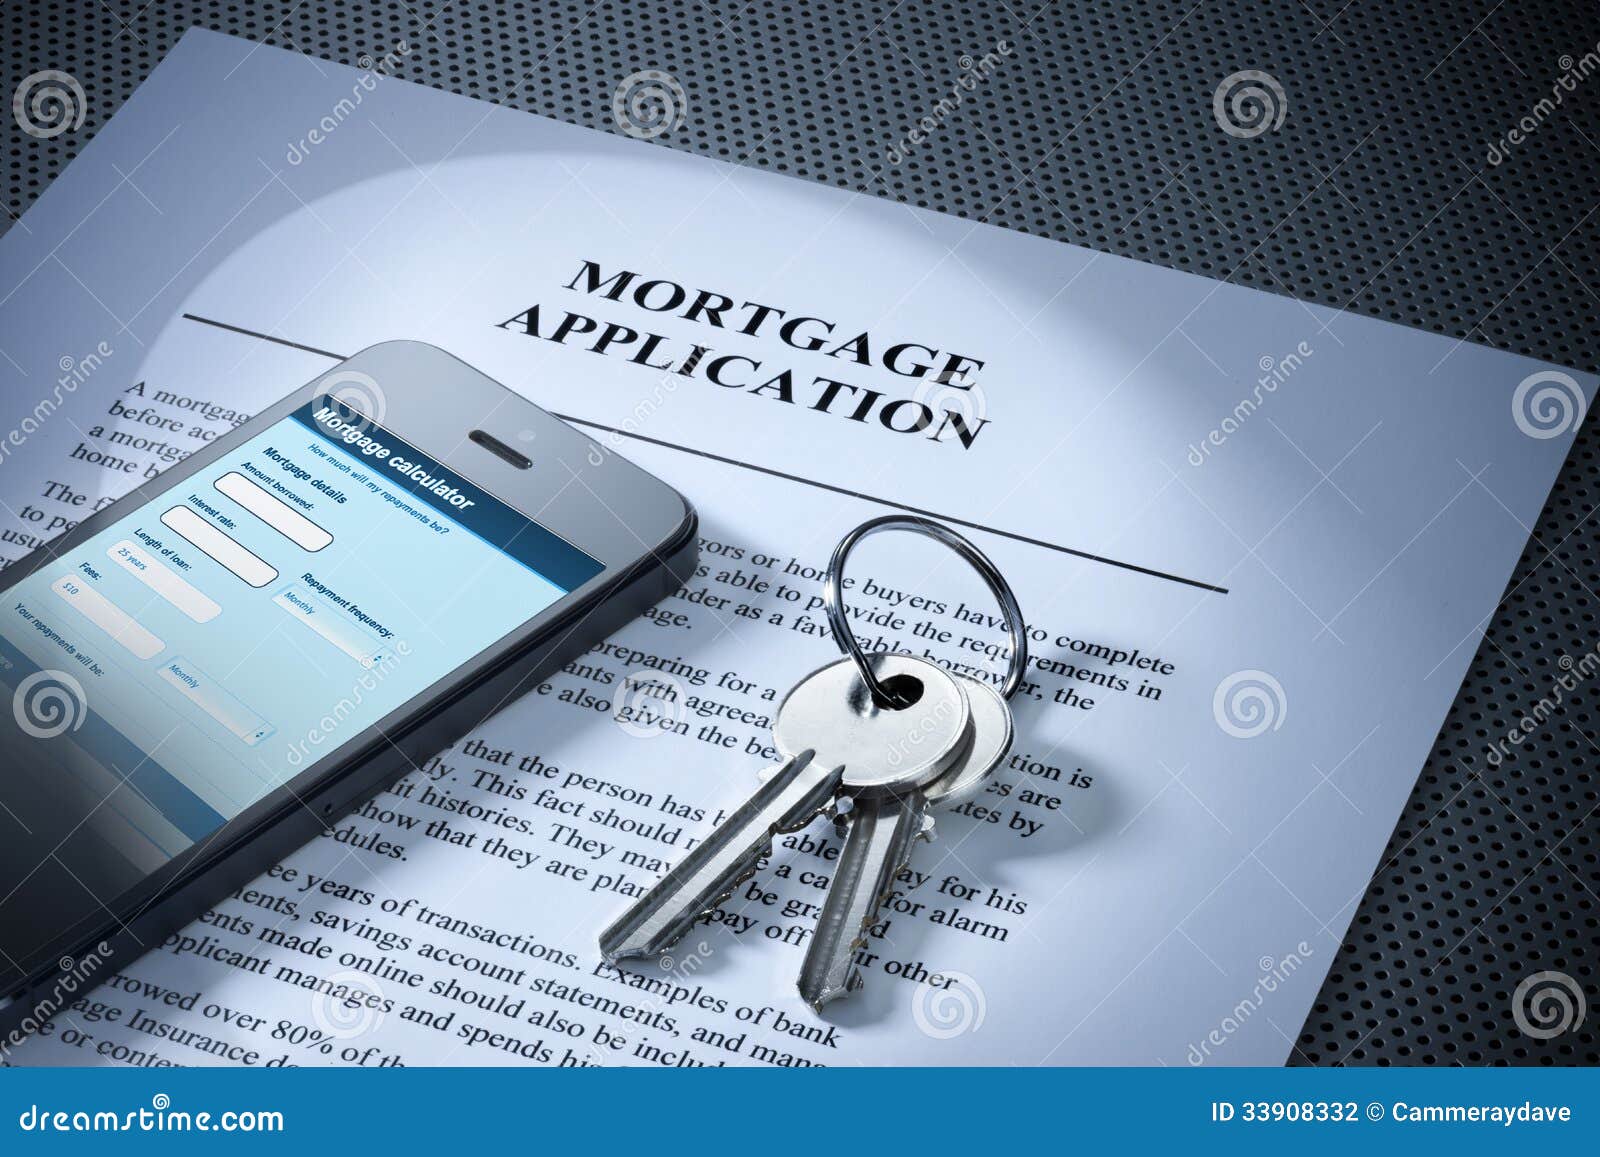 mortgage loan keys cell phone